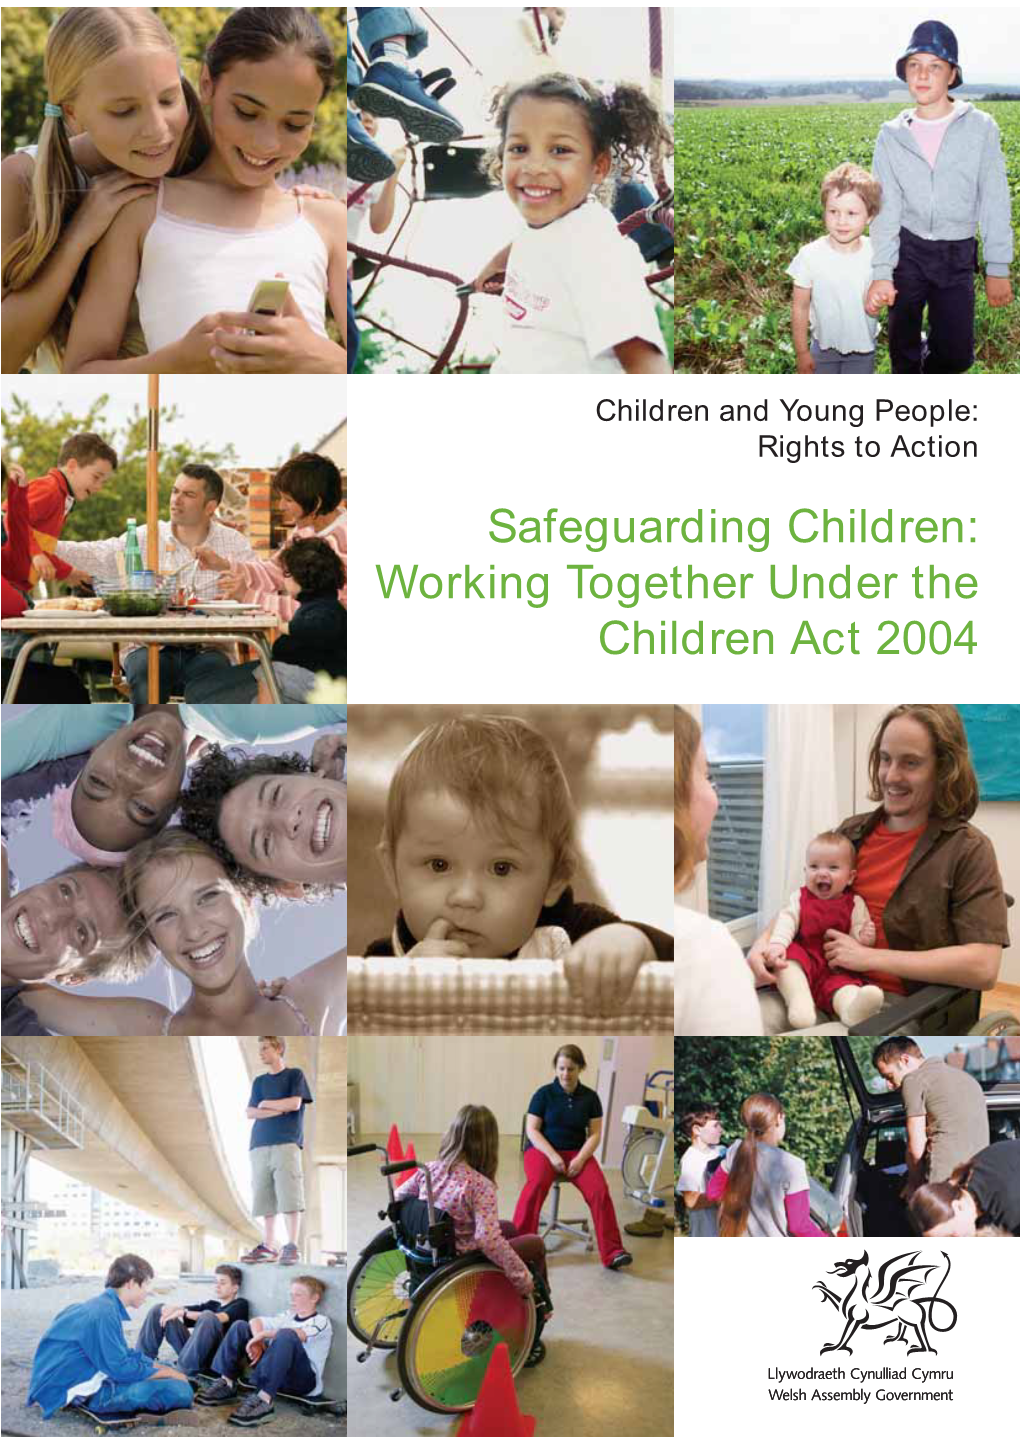 Safeguarding Children: Working Together Under the Children Act 2004 G/232/06-07 September ISBN 0 7504 8910 3 CMK-22-12-077 © Crown Copyright 2006 Contents